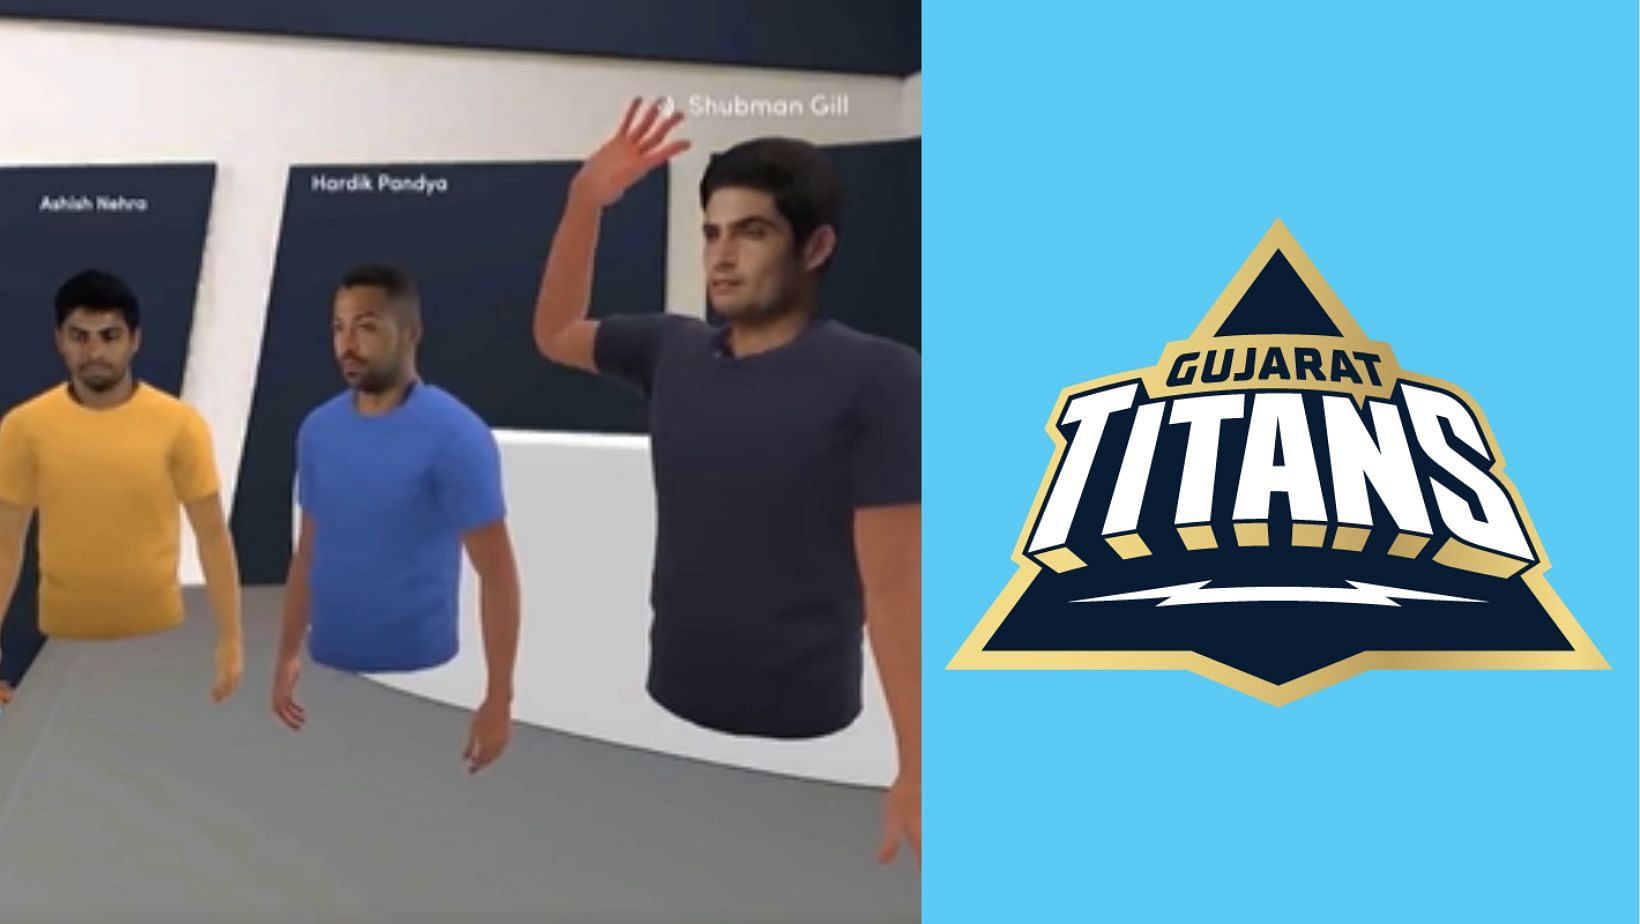 Virtual members of Gujarat Titans unveil team logo.